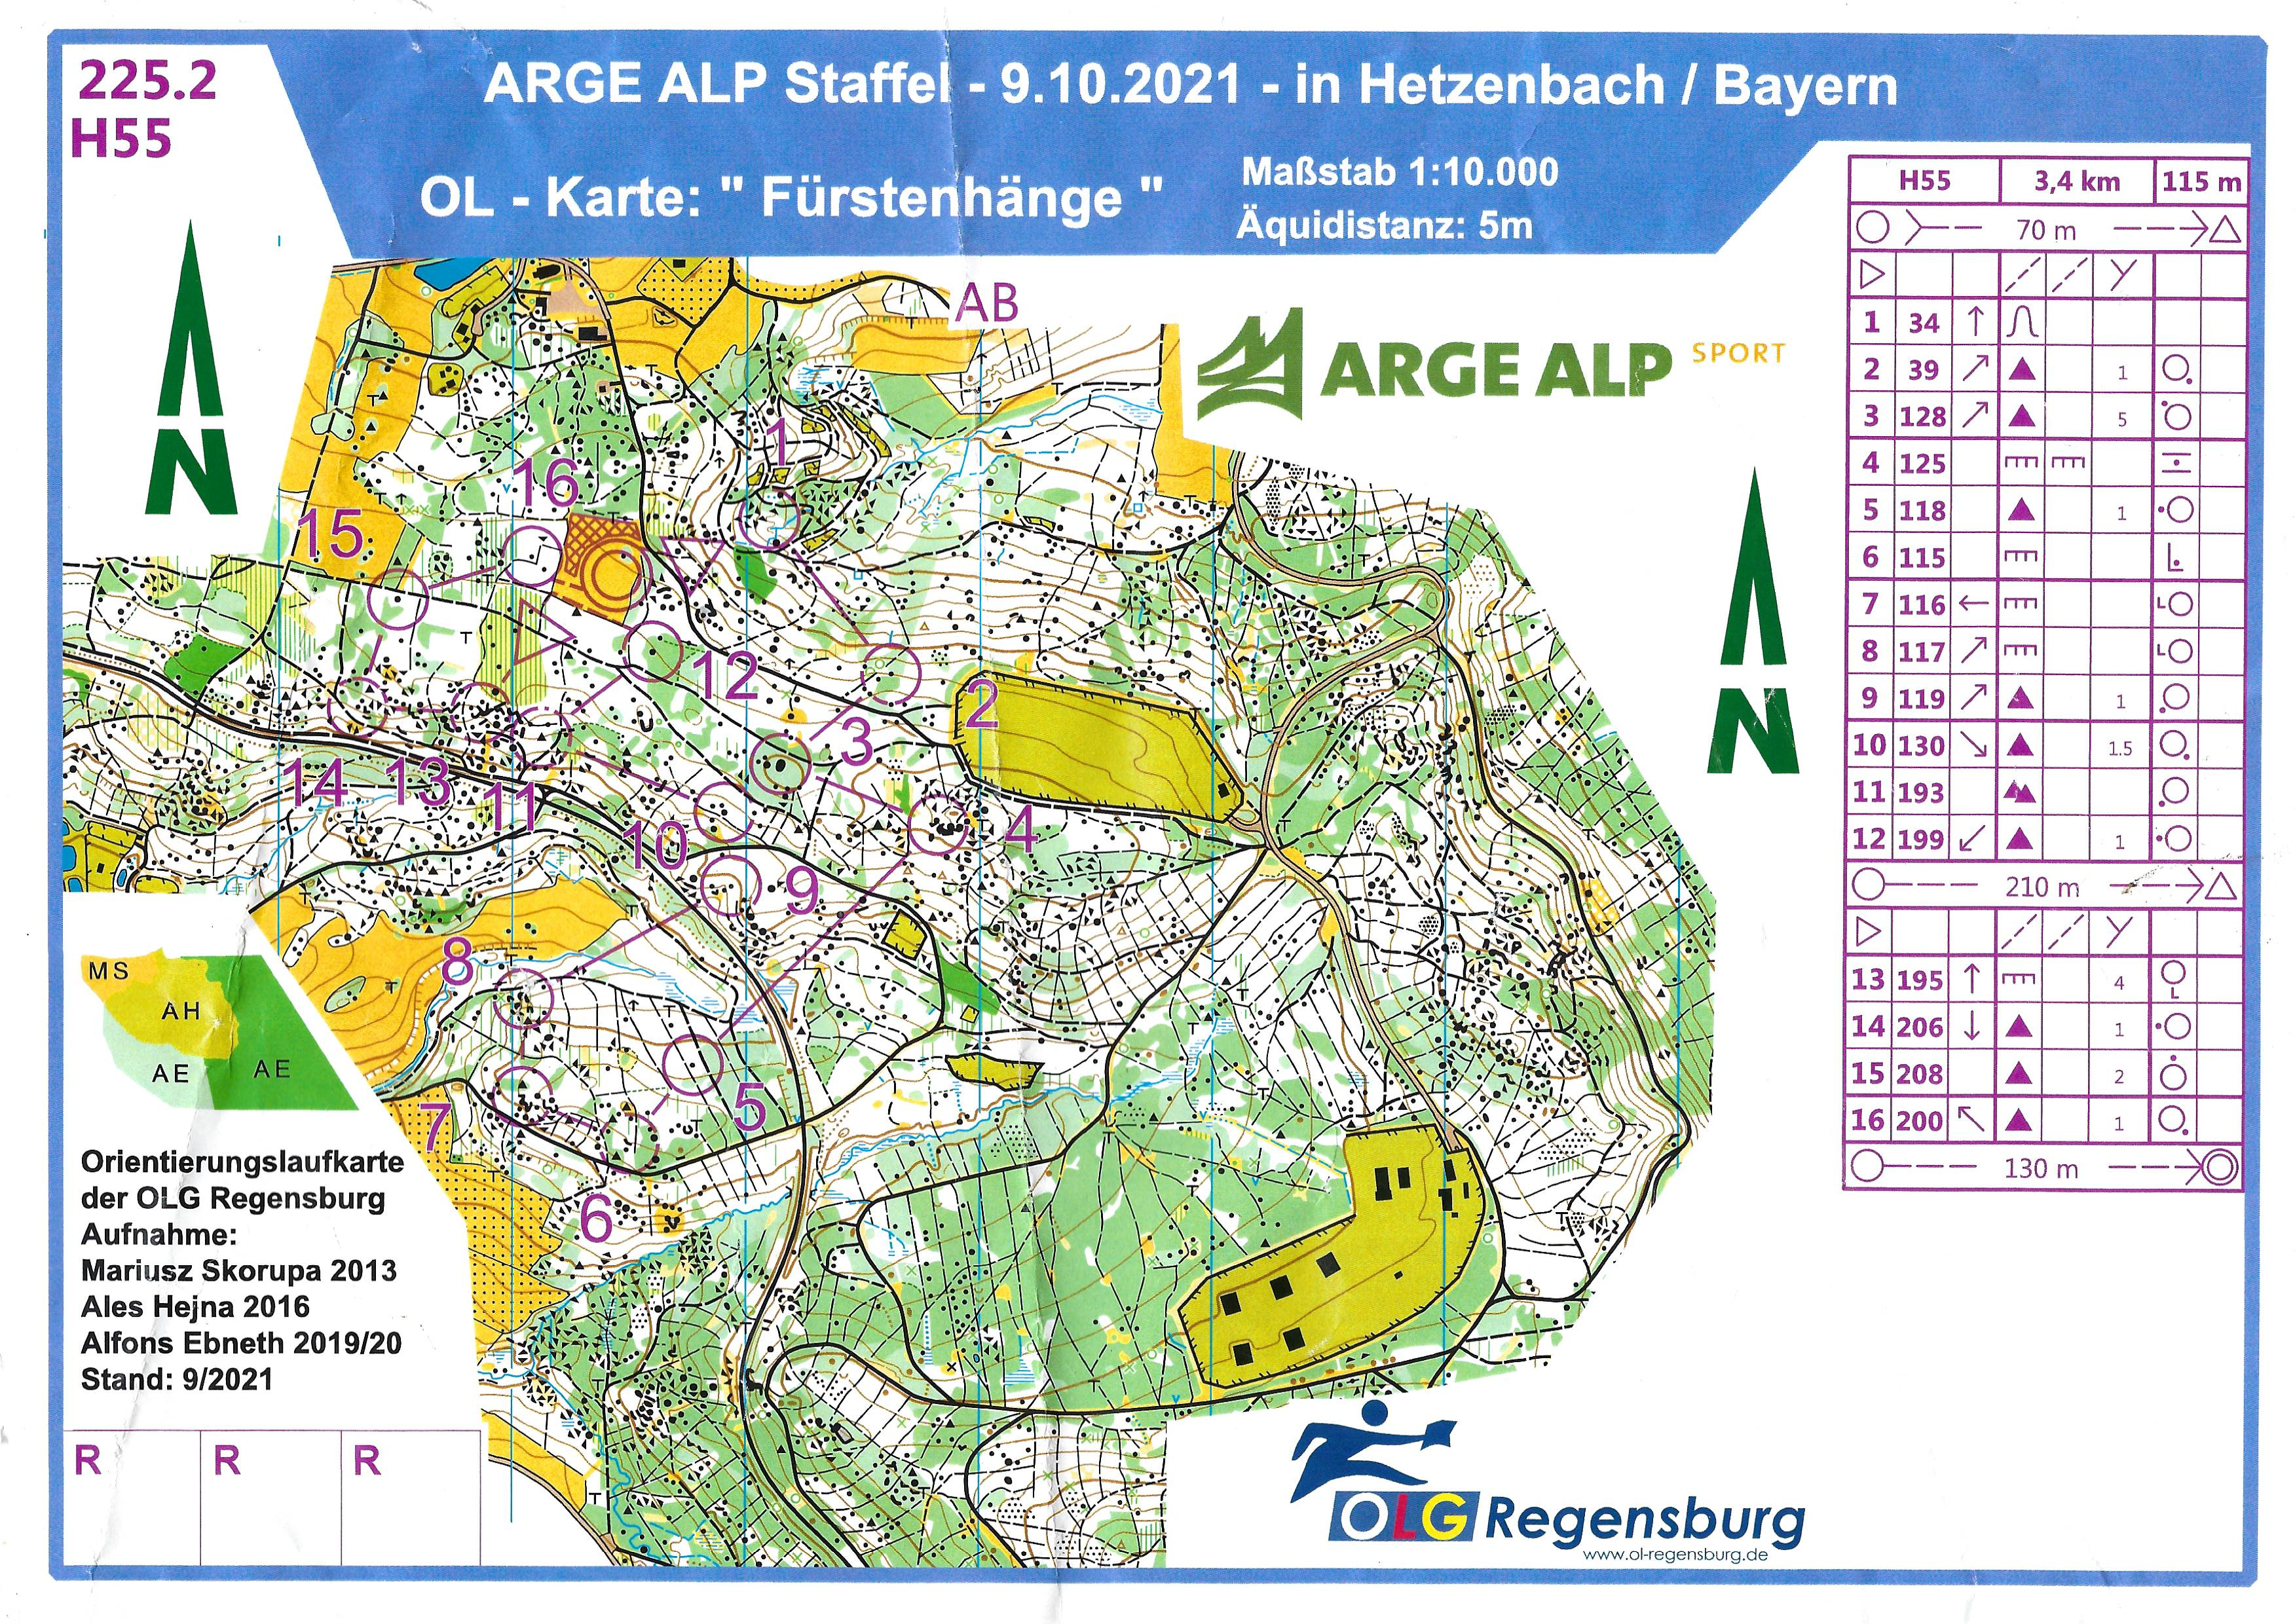 Arge Alp 2021 Regensburg Staffel (09.10.2021)